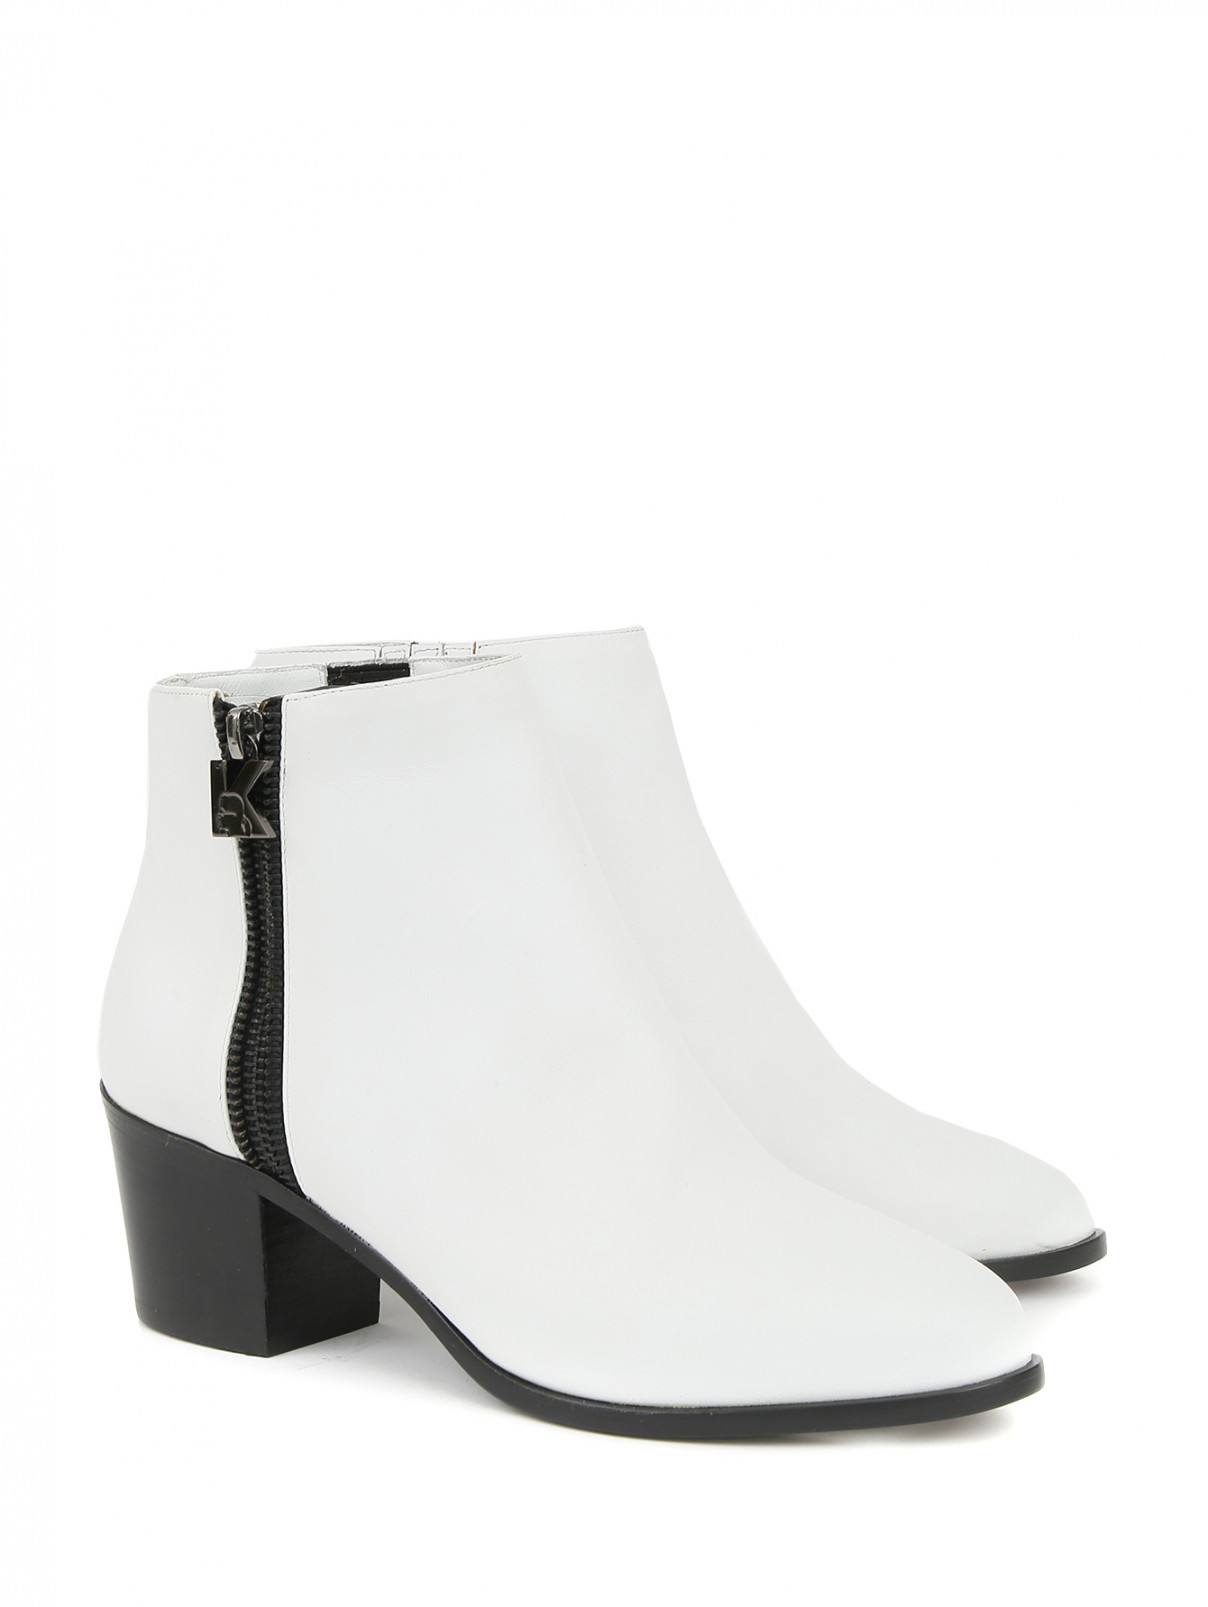 Ботильоны из кожи на устойчивом каблуке Karl Lagerfeld  –  Общий вид  – Цвет:  Белый